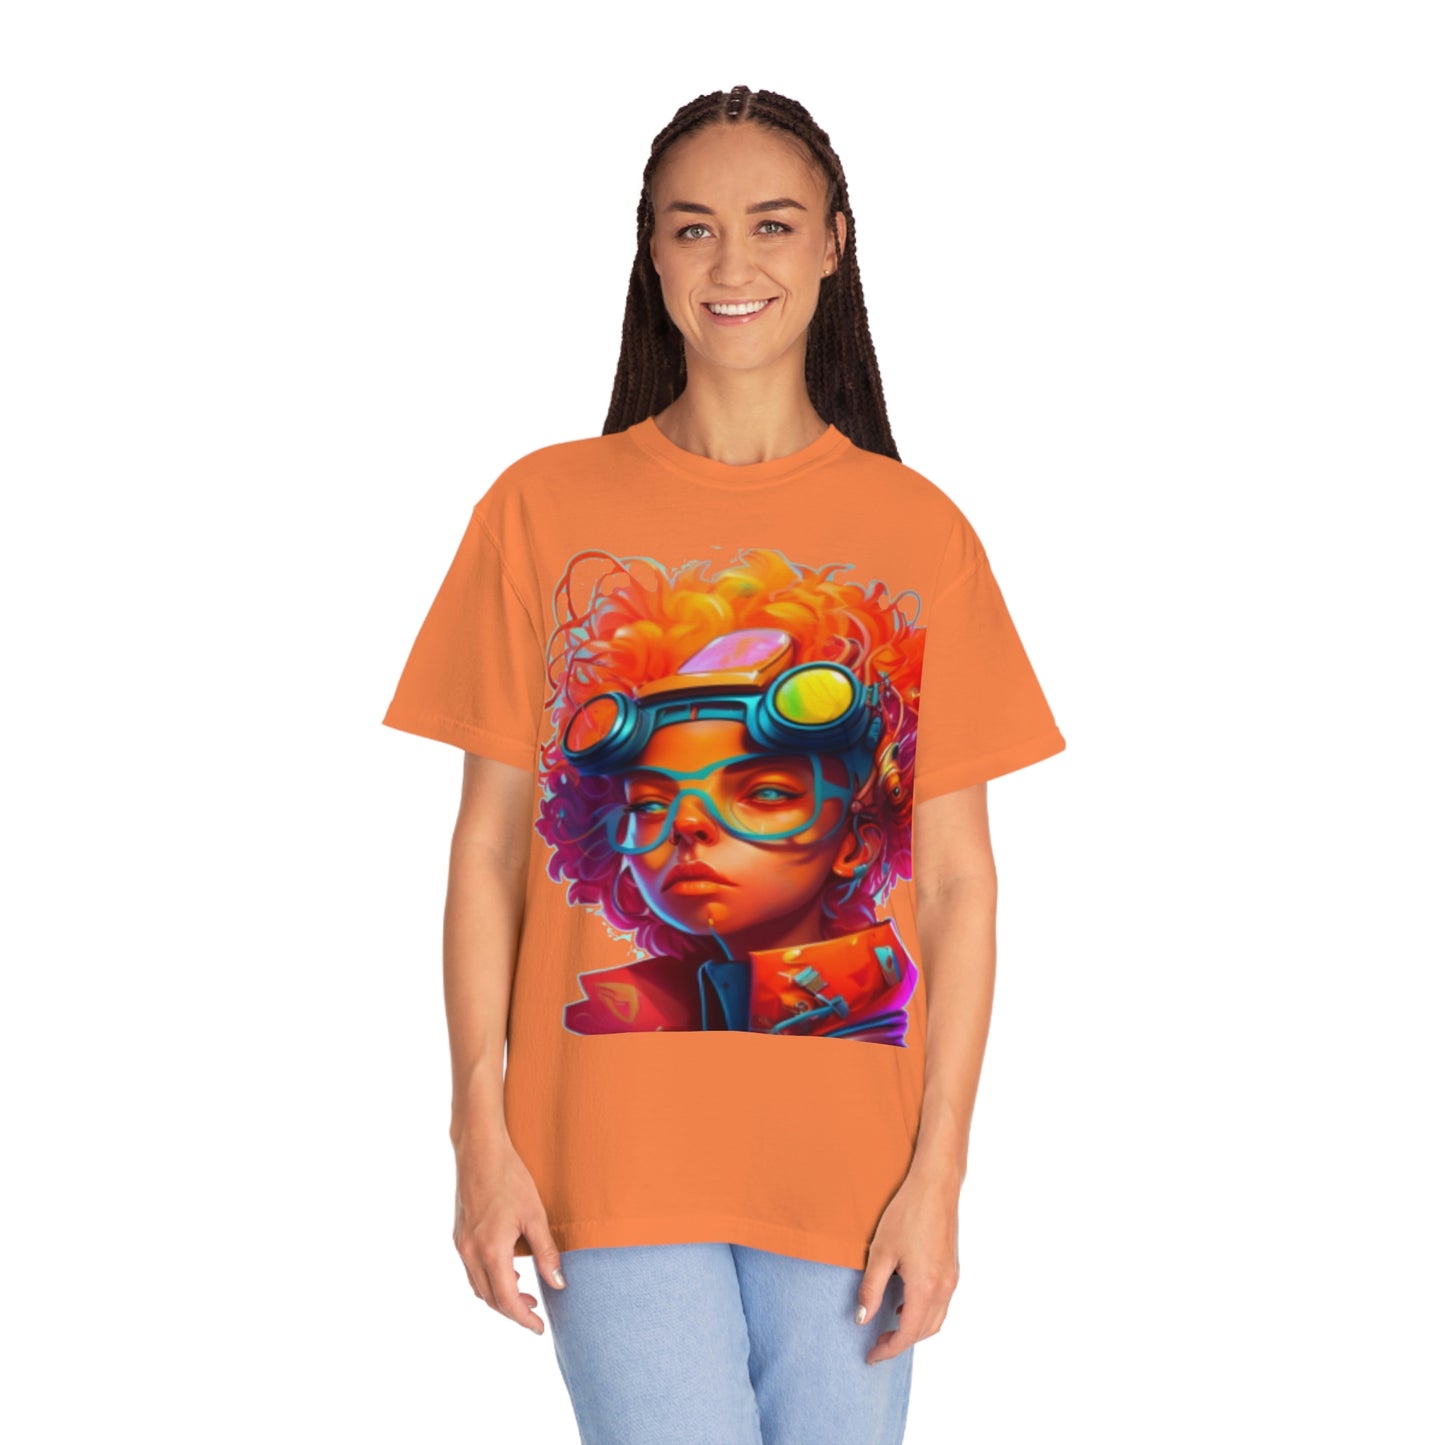 Unisex Garment-Dyed T-shirt Futuristic Artist Girl